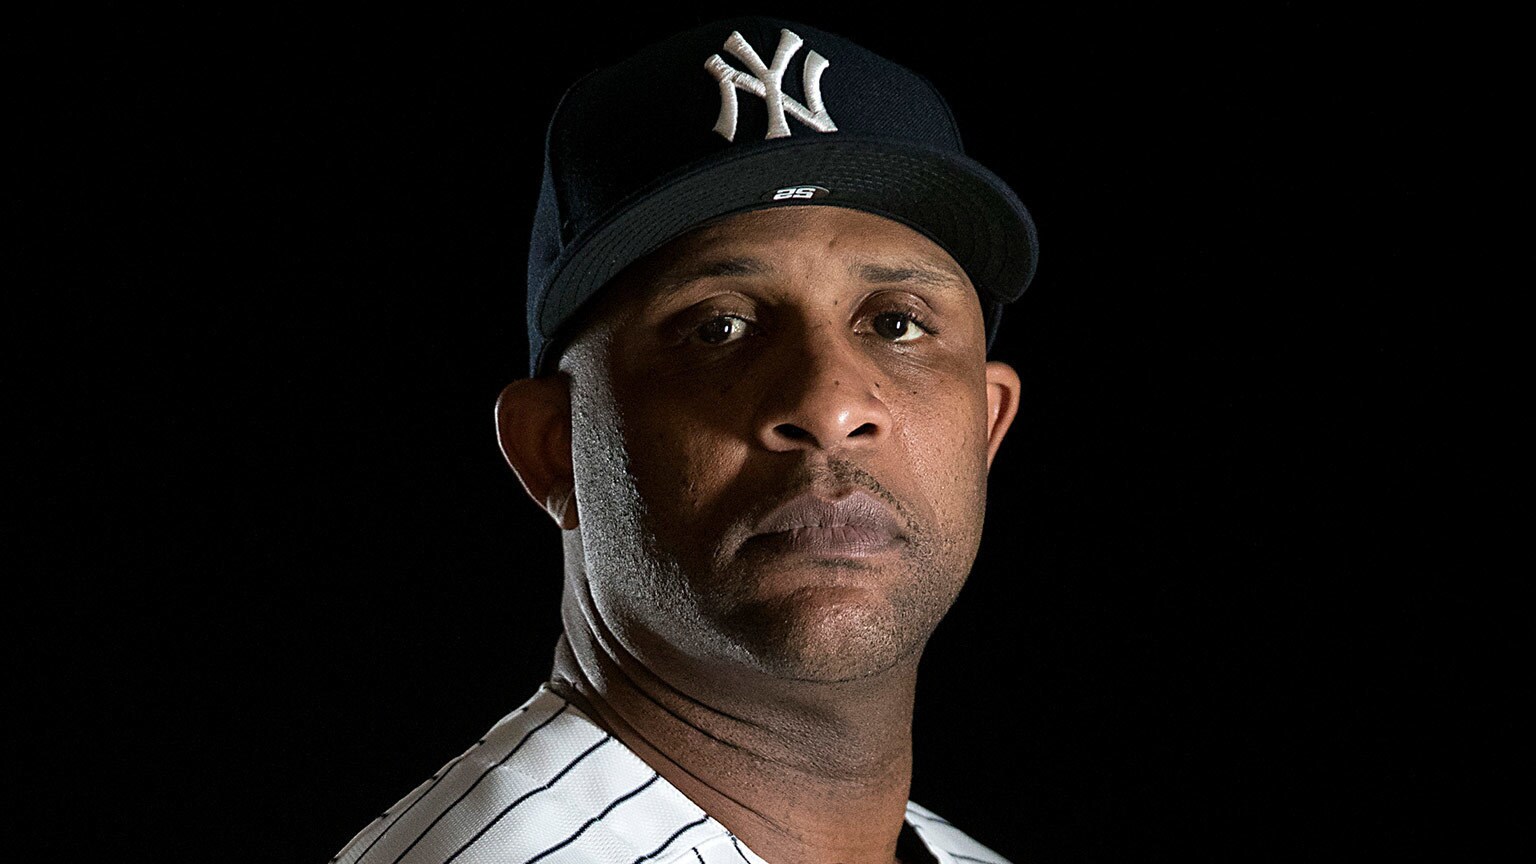 New York Yankees Star Pitcher CC Sabathia Gets Pumped for Star Wars Night